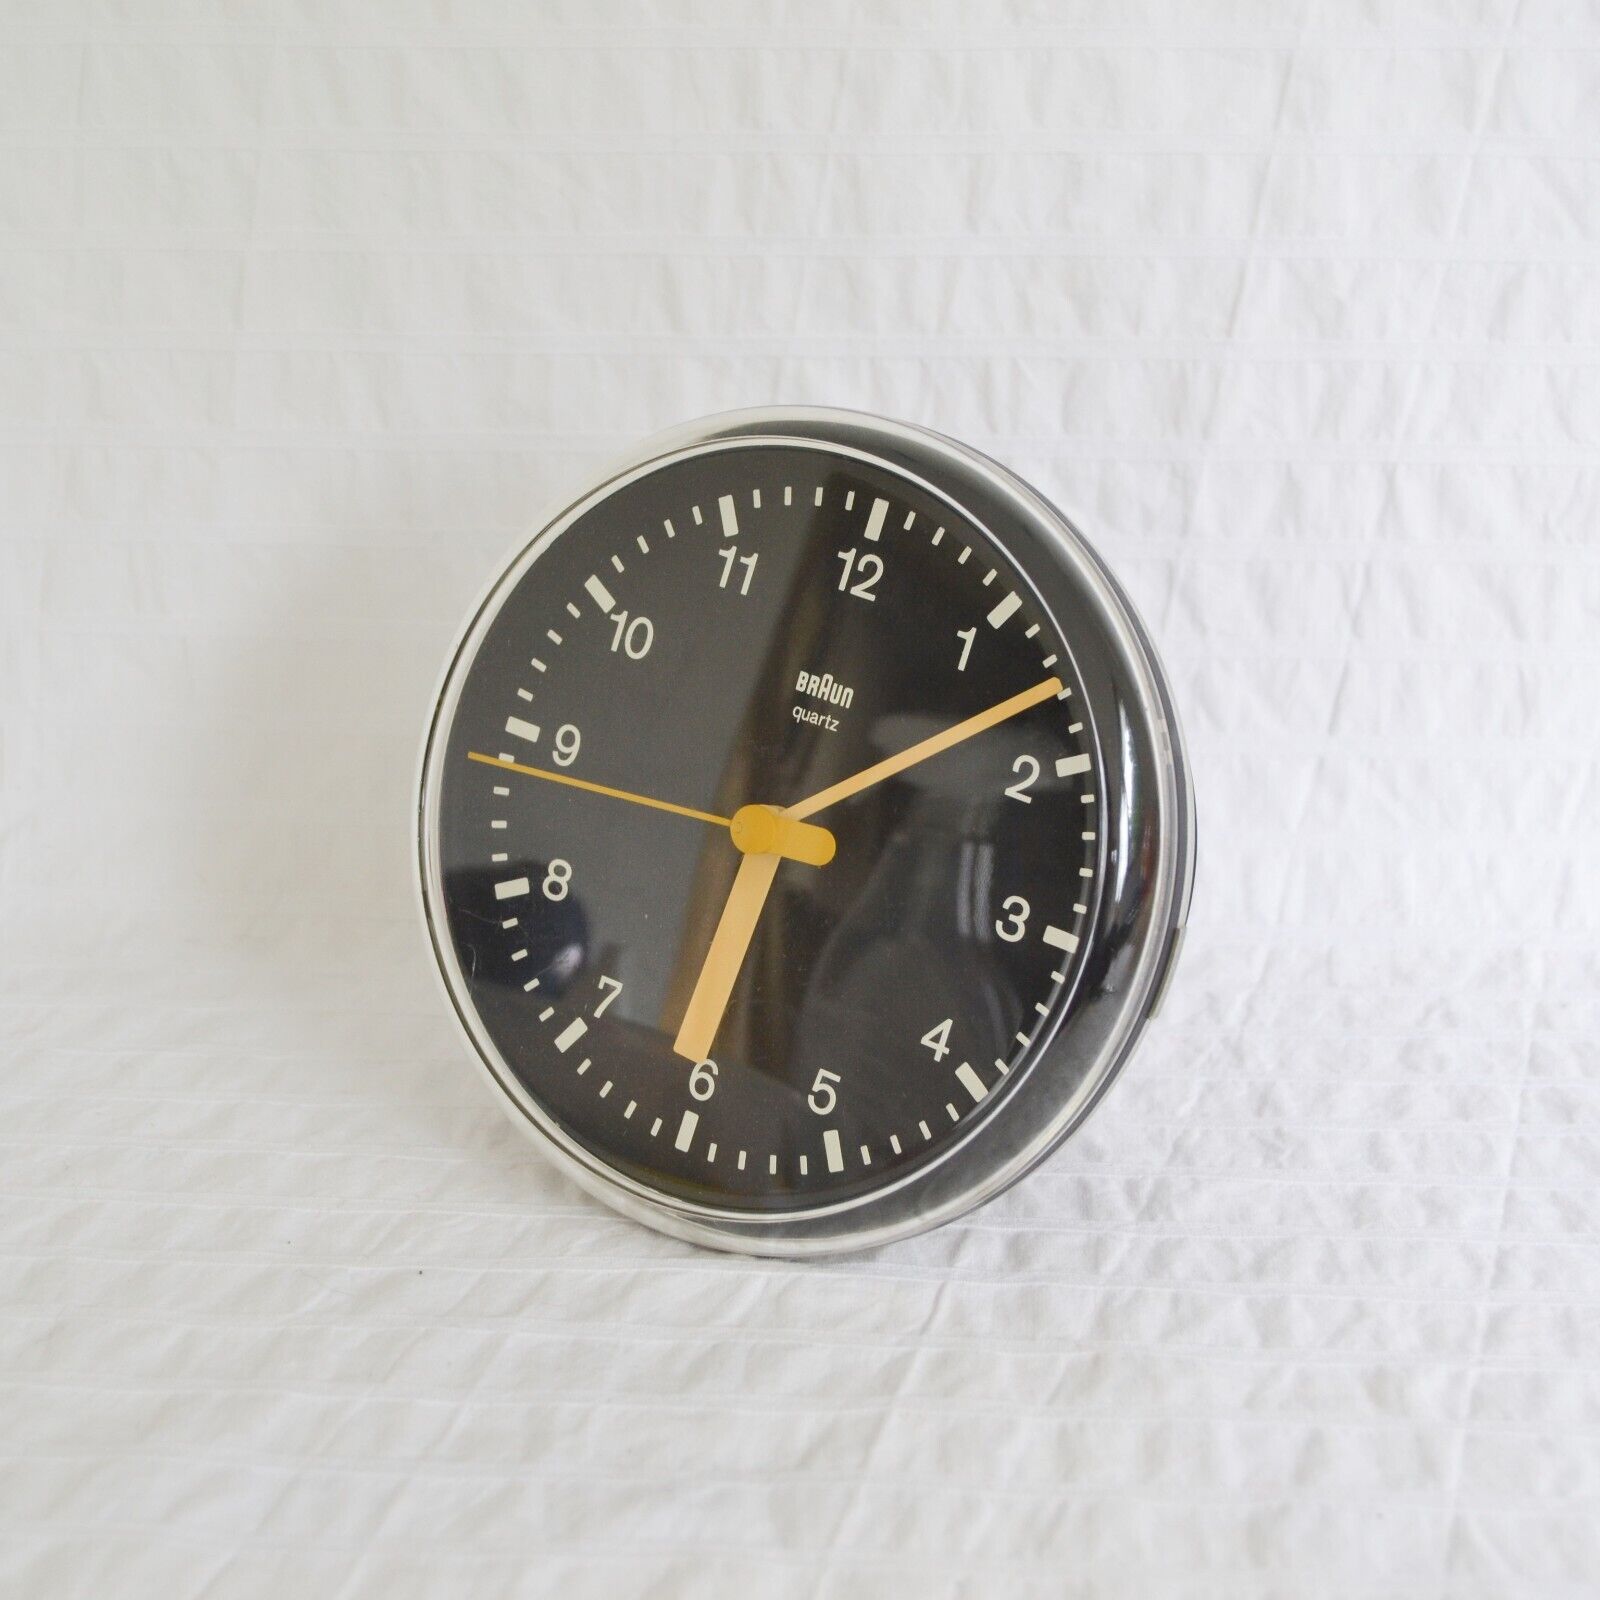 Vintage Braun AG Wall Clock Type 4833 Domo Quartz 1979 by Dietrich Lubs Bauhaus